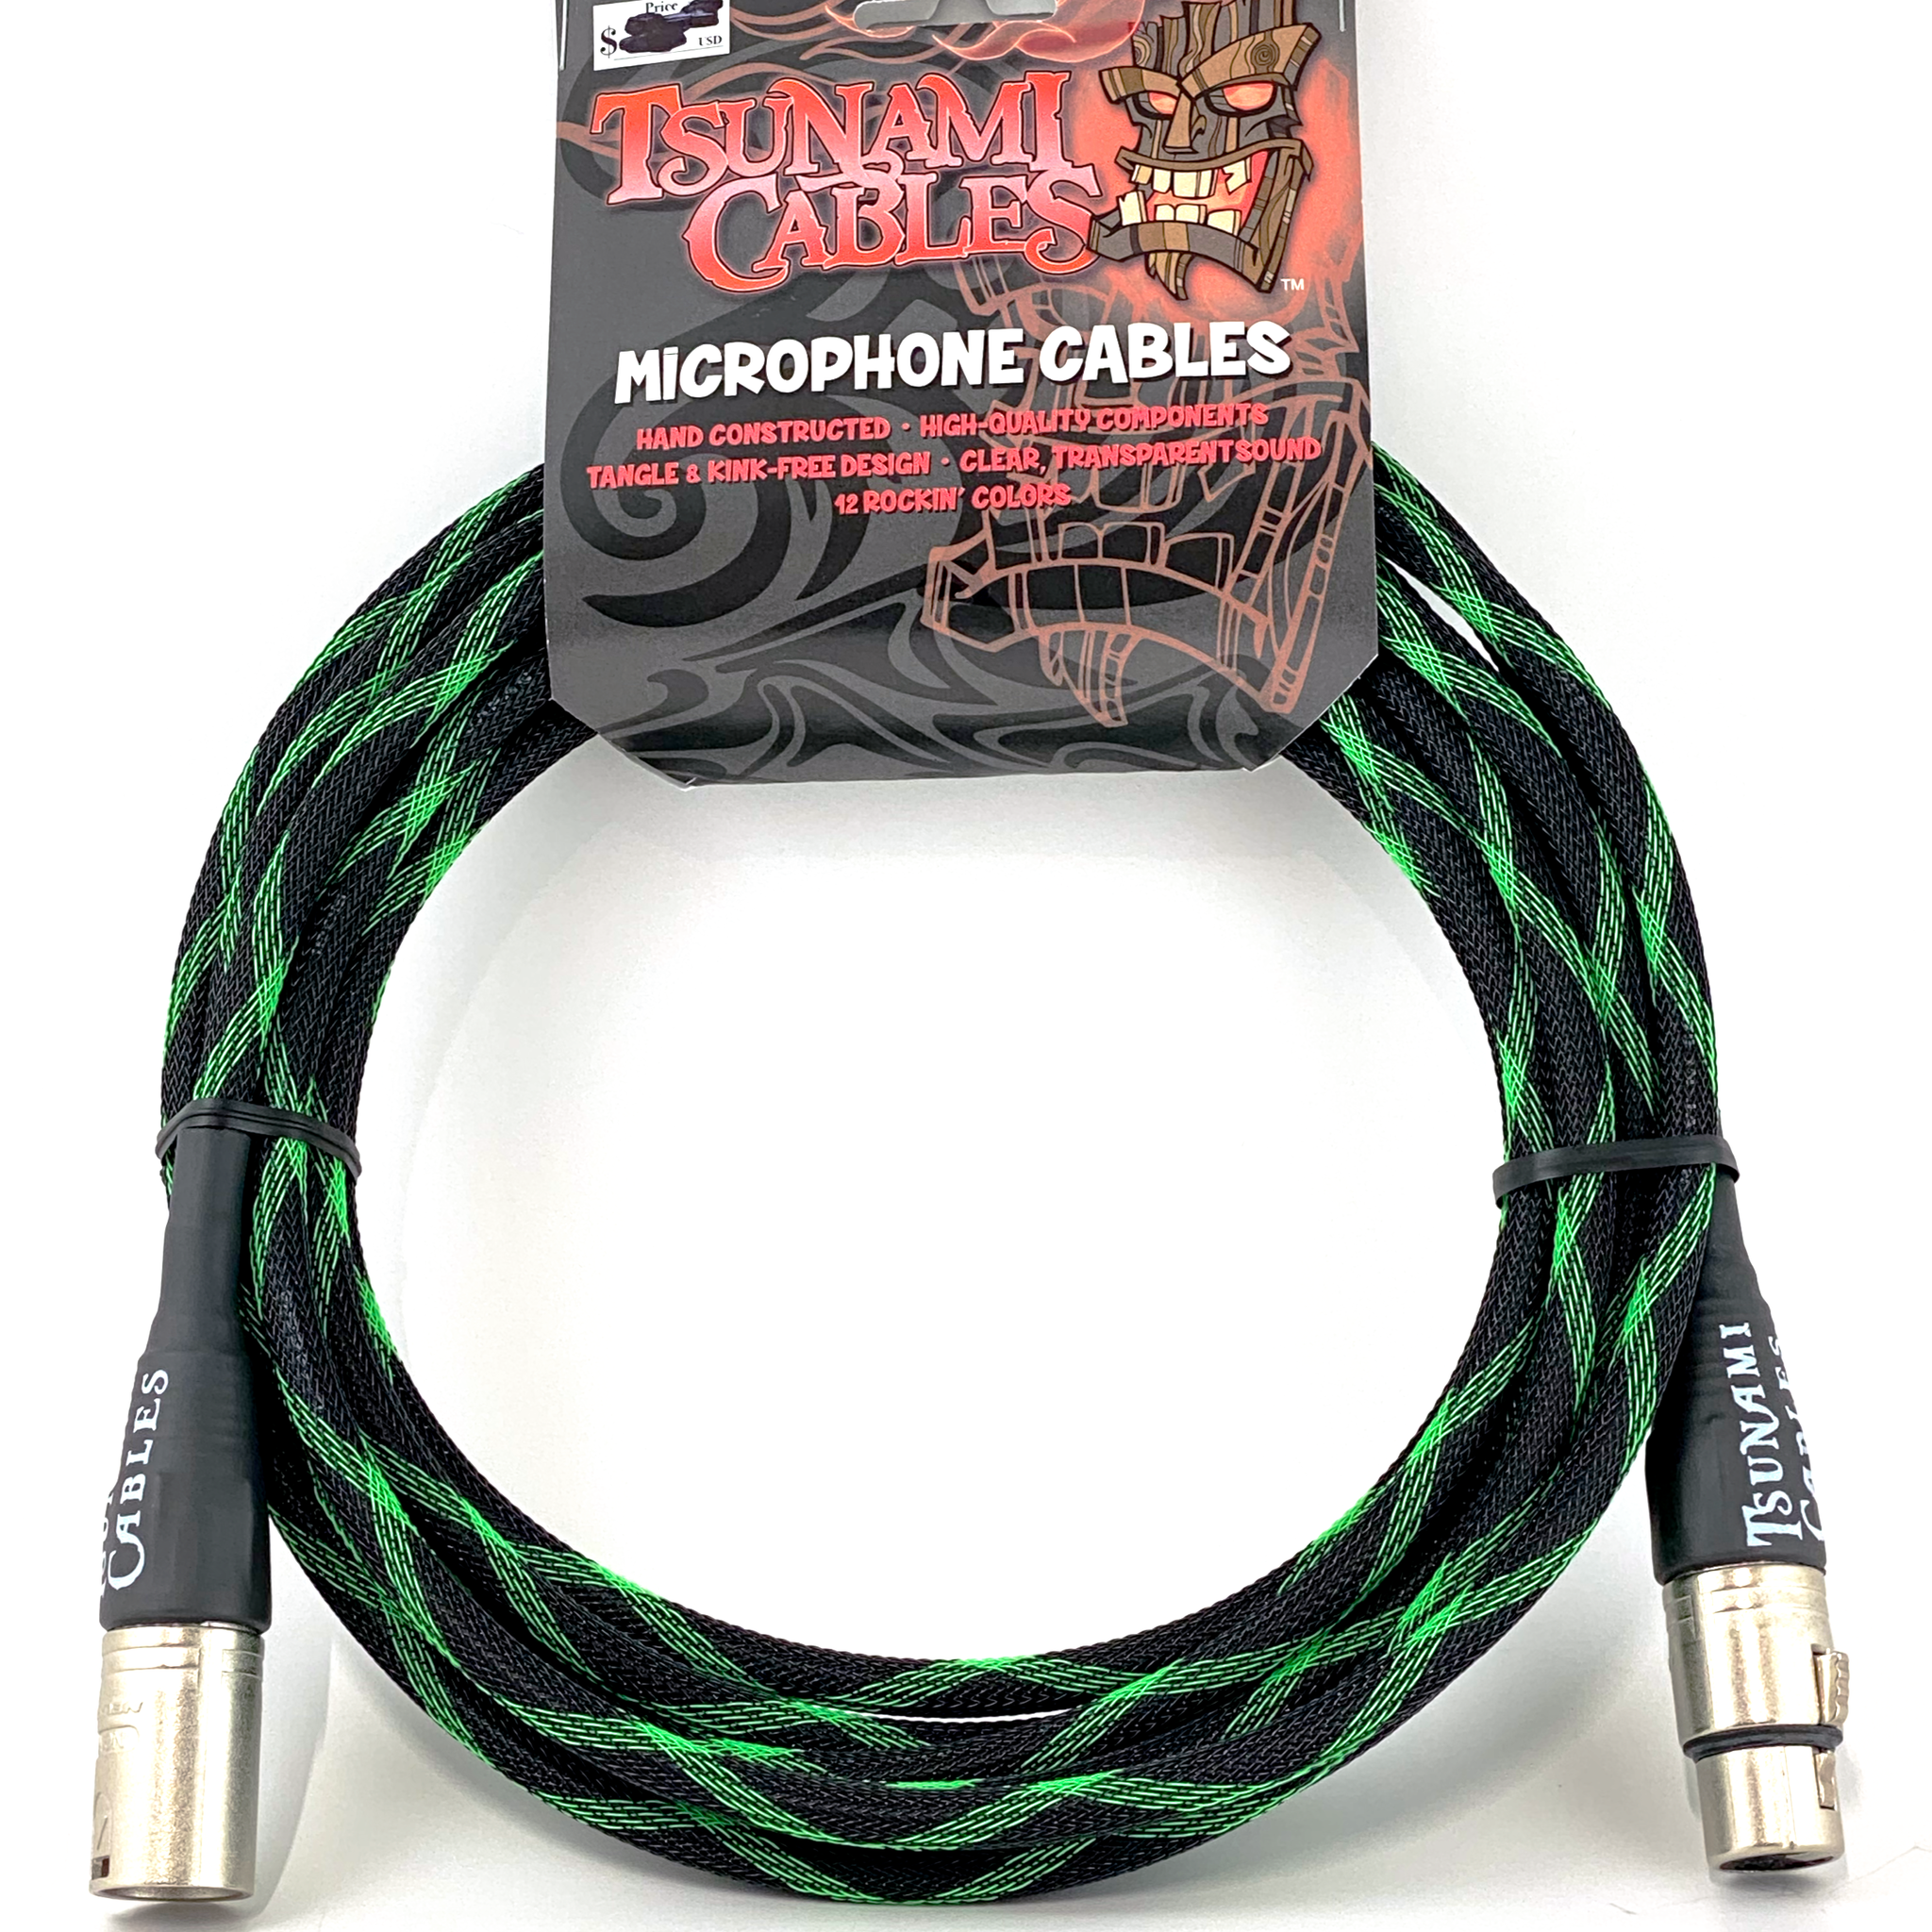 Tsunami Cables 15' Handcrafted Premium Microphone XLR Cable, "Matrix" (Black/Green)